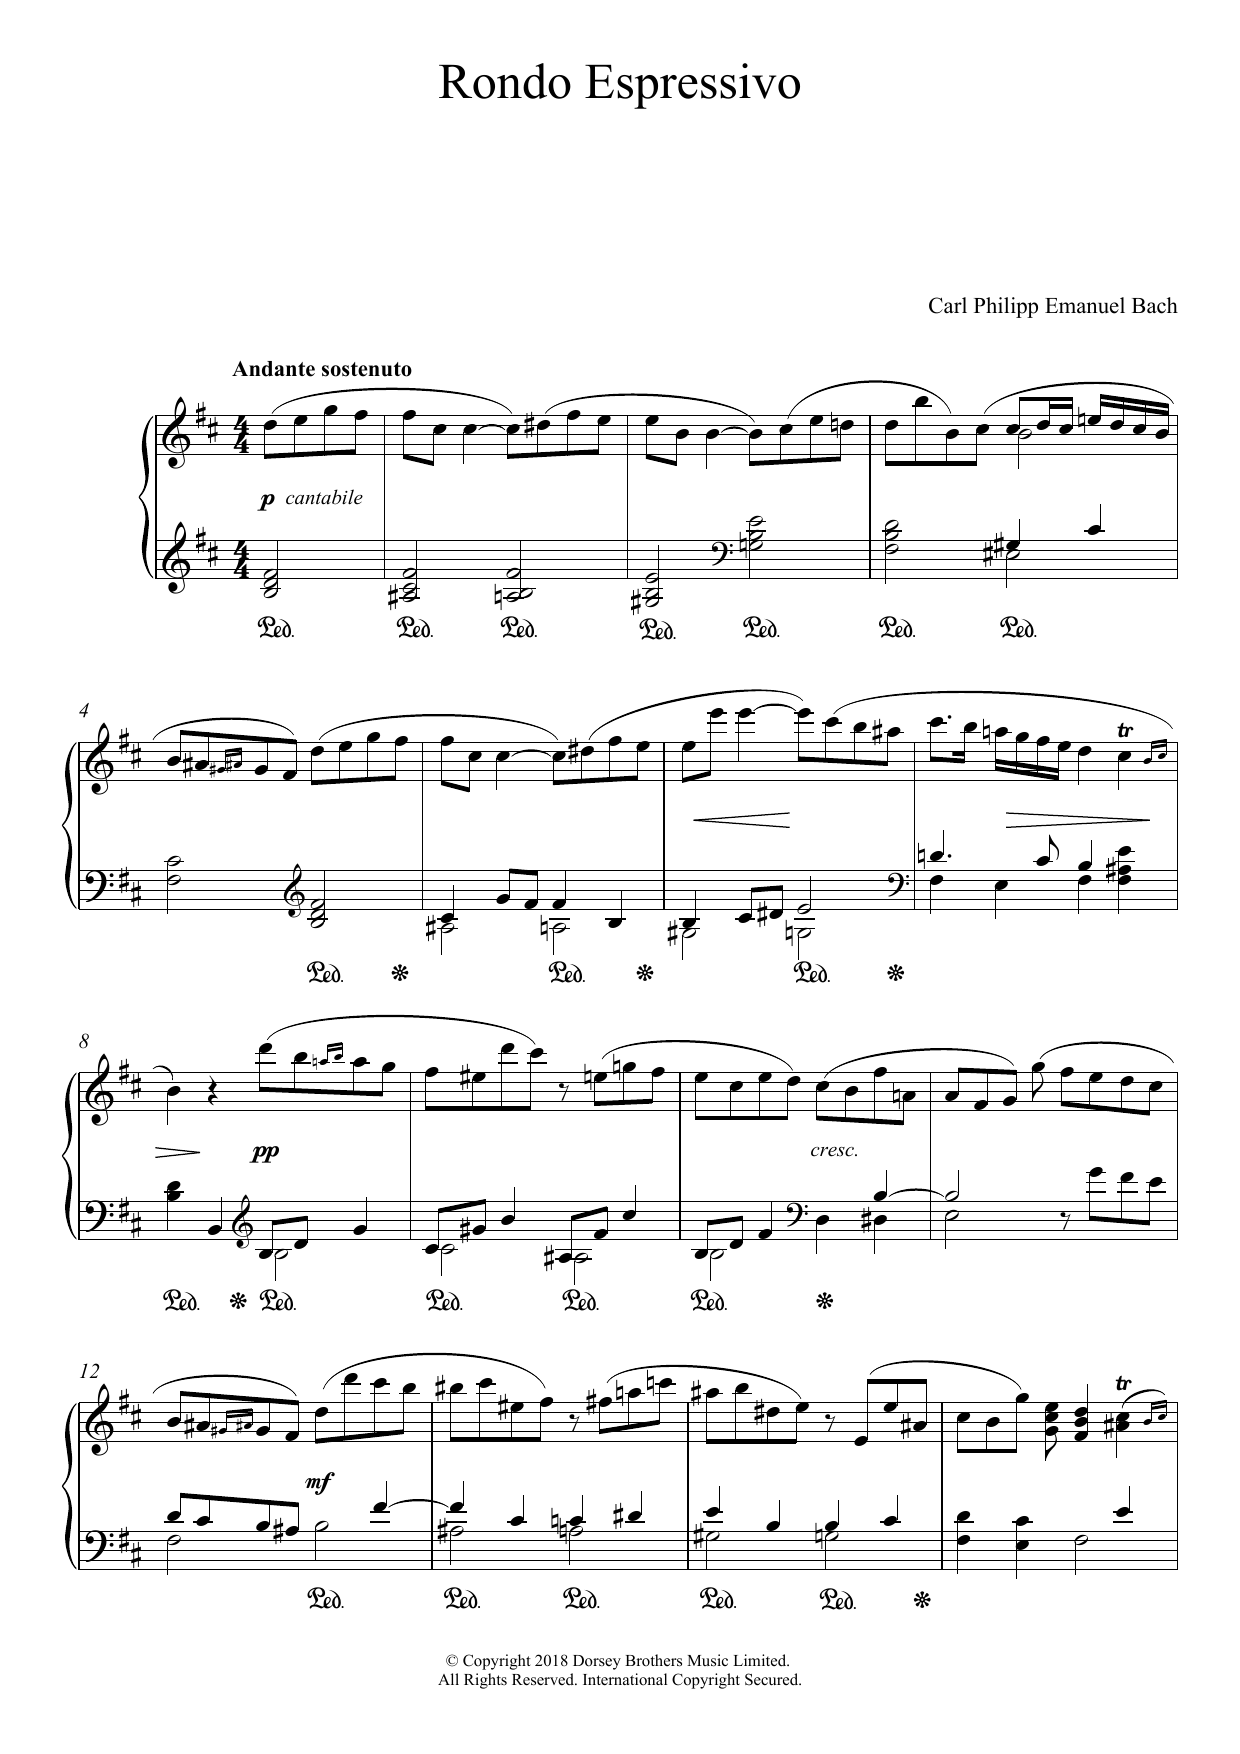 Carl Philipp Emanuel Bach Rondo Espressivo Sheet Music Notes & Chords for Piano - Download or Print PDF